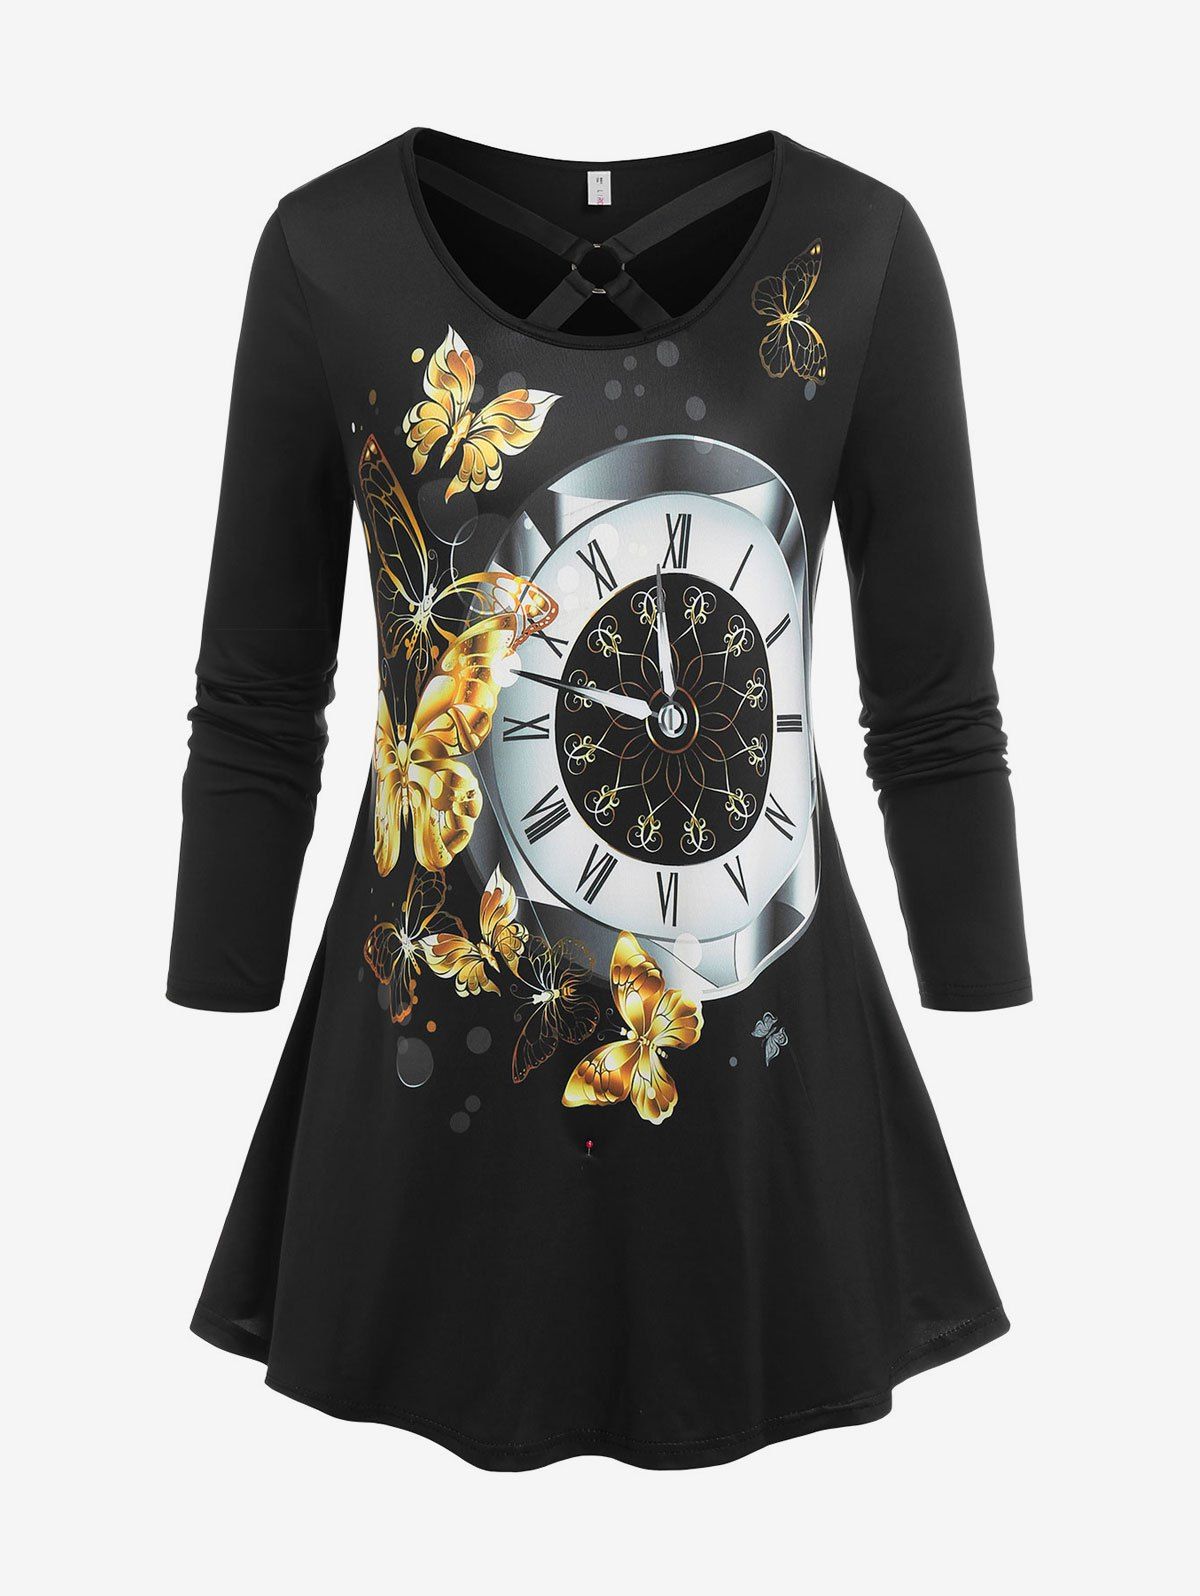 Plus Size Butterfly Clock Print O Ring T-shirt - BLACK 4X